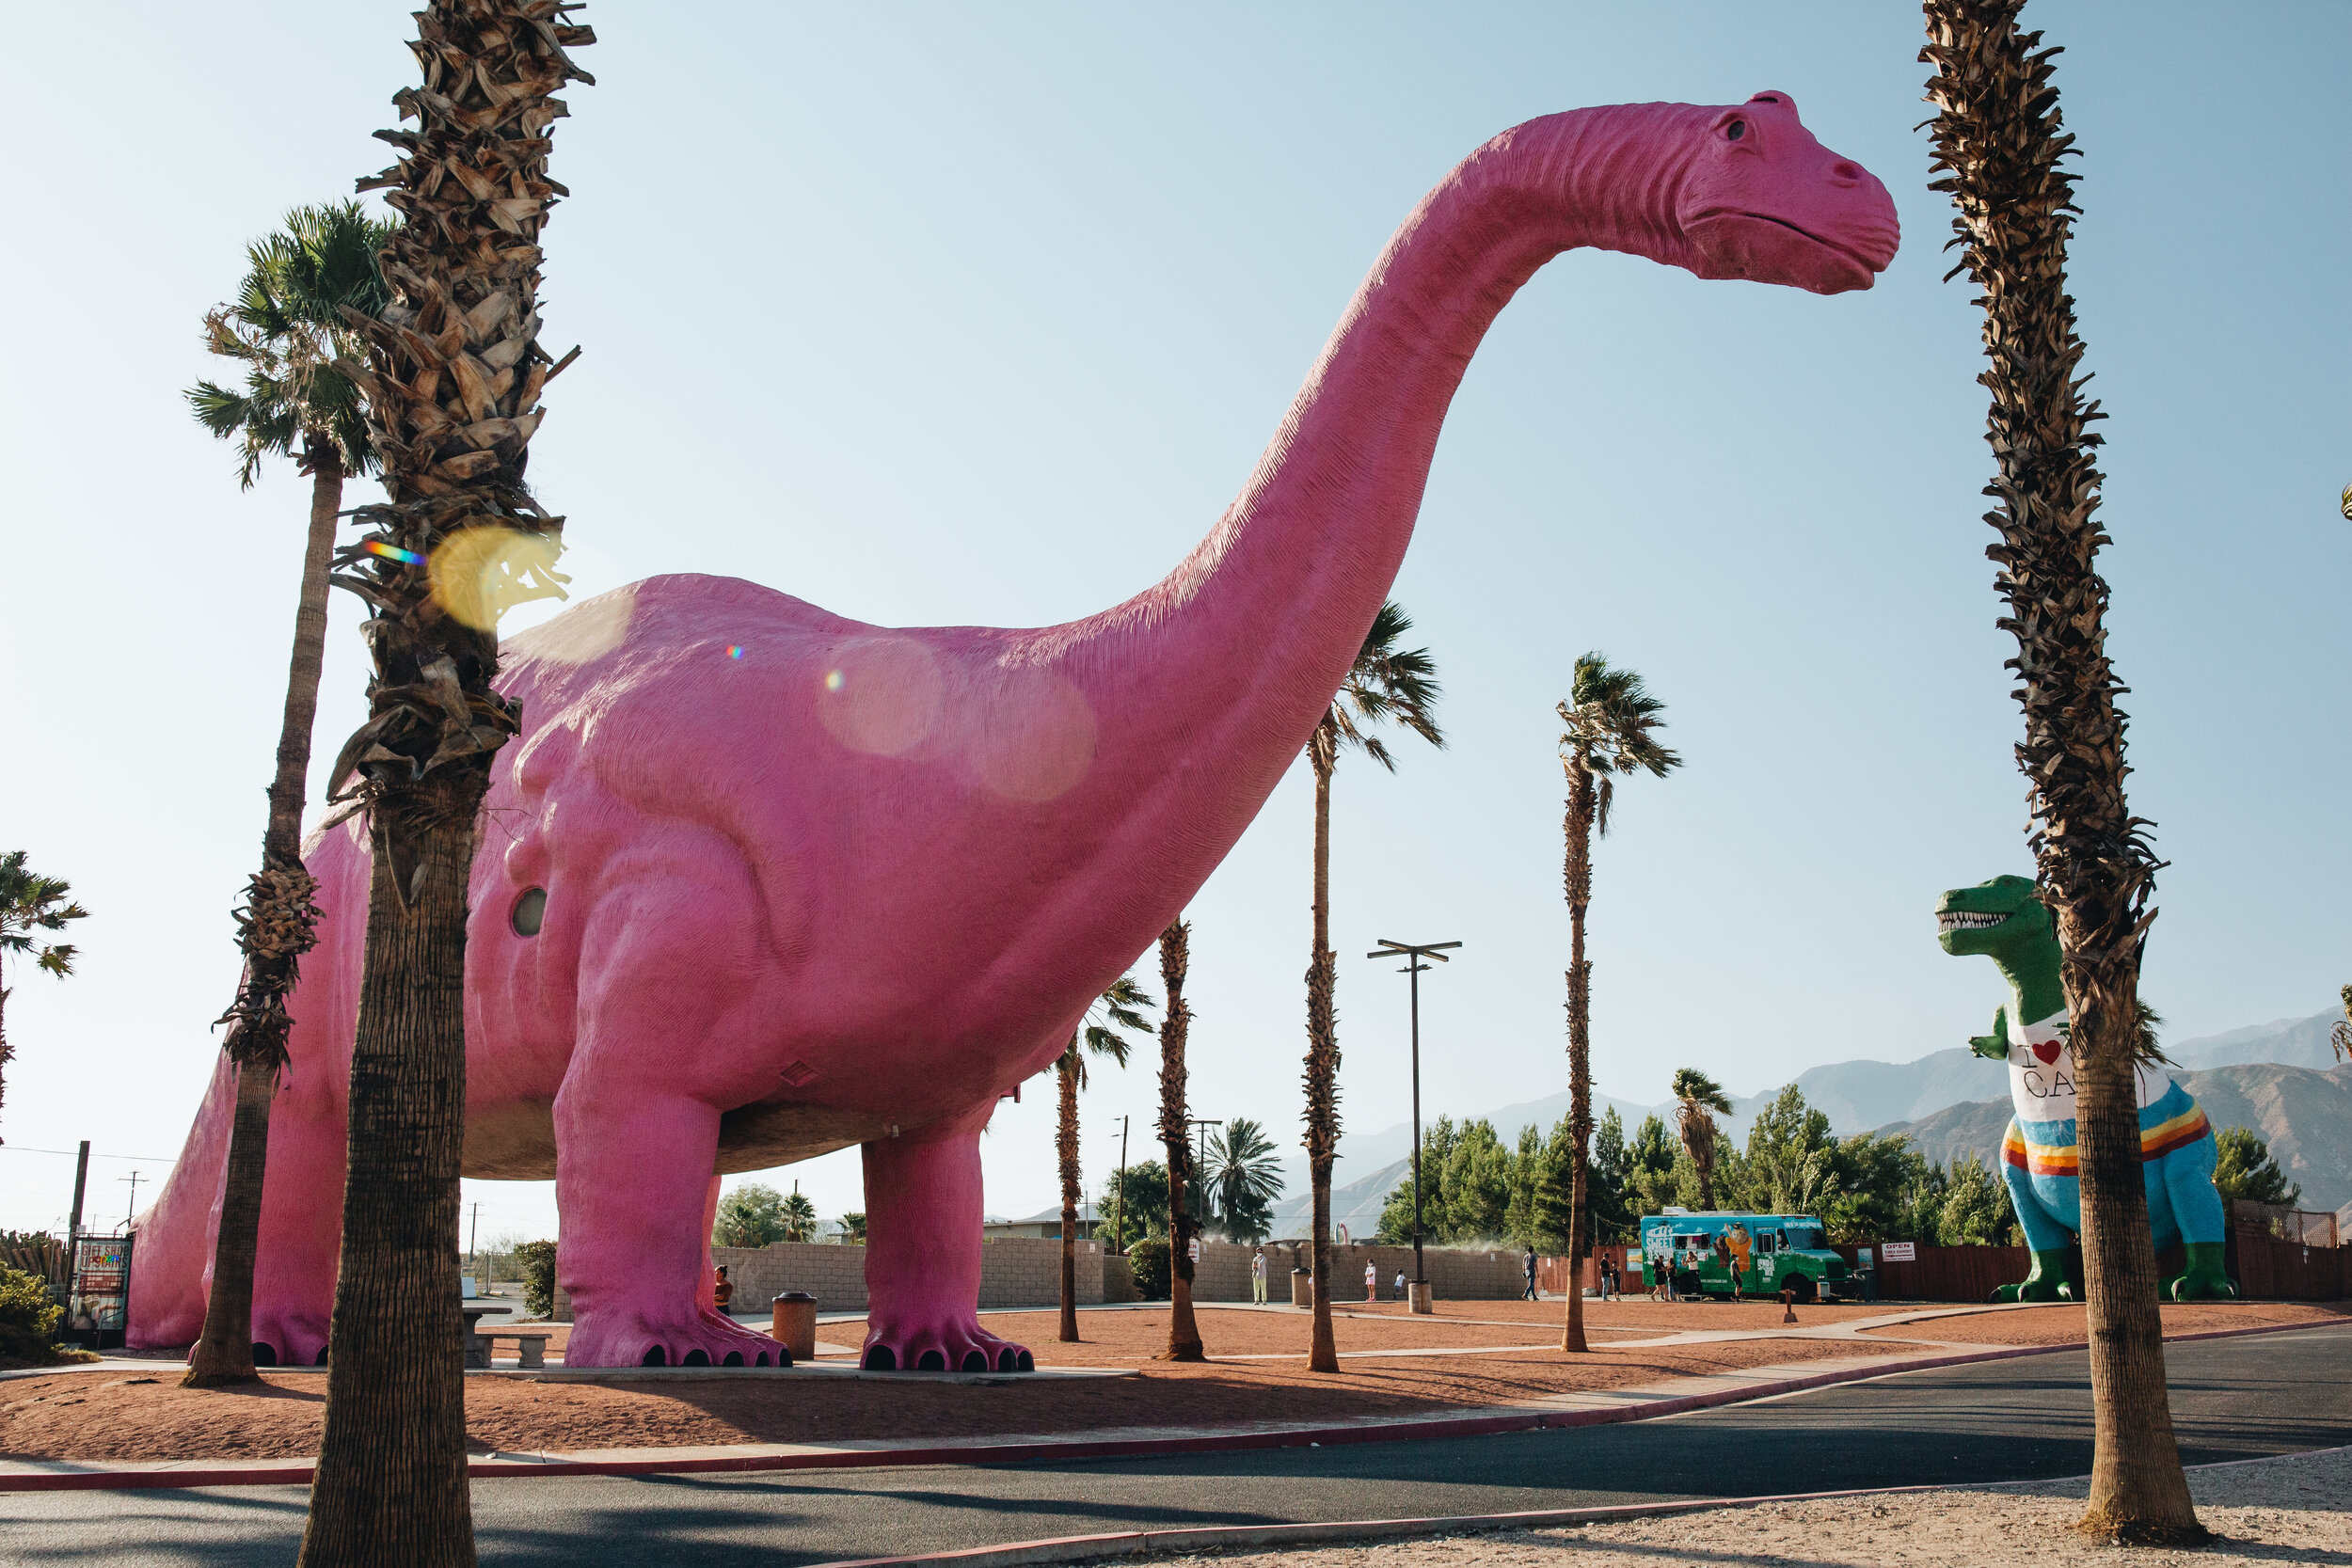 Visit the Giant Roadside Cabazon Dinosaurs